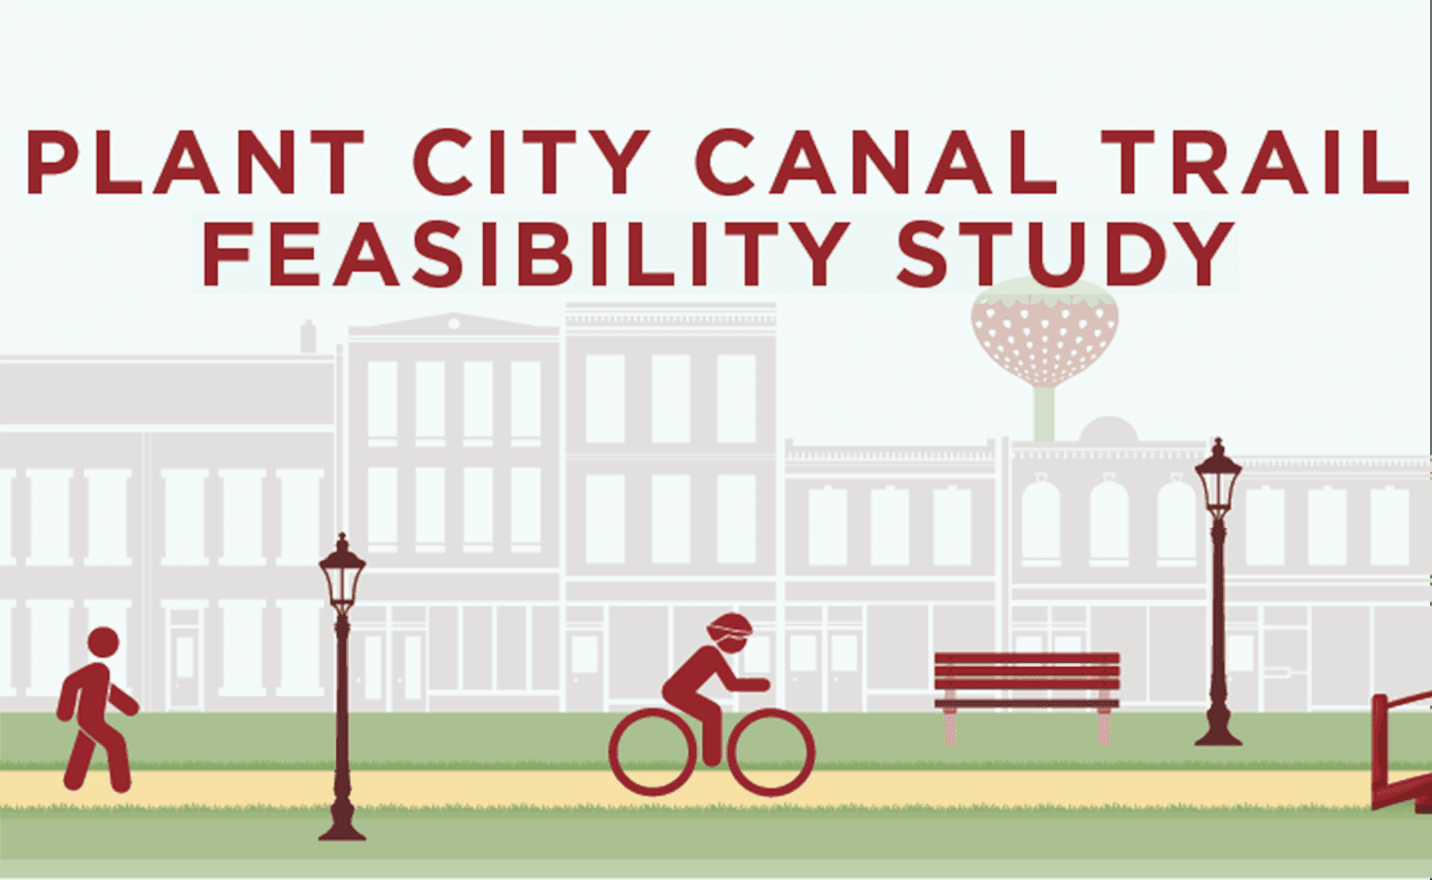 Take the Plant City Canal Trail Survey